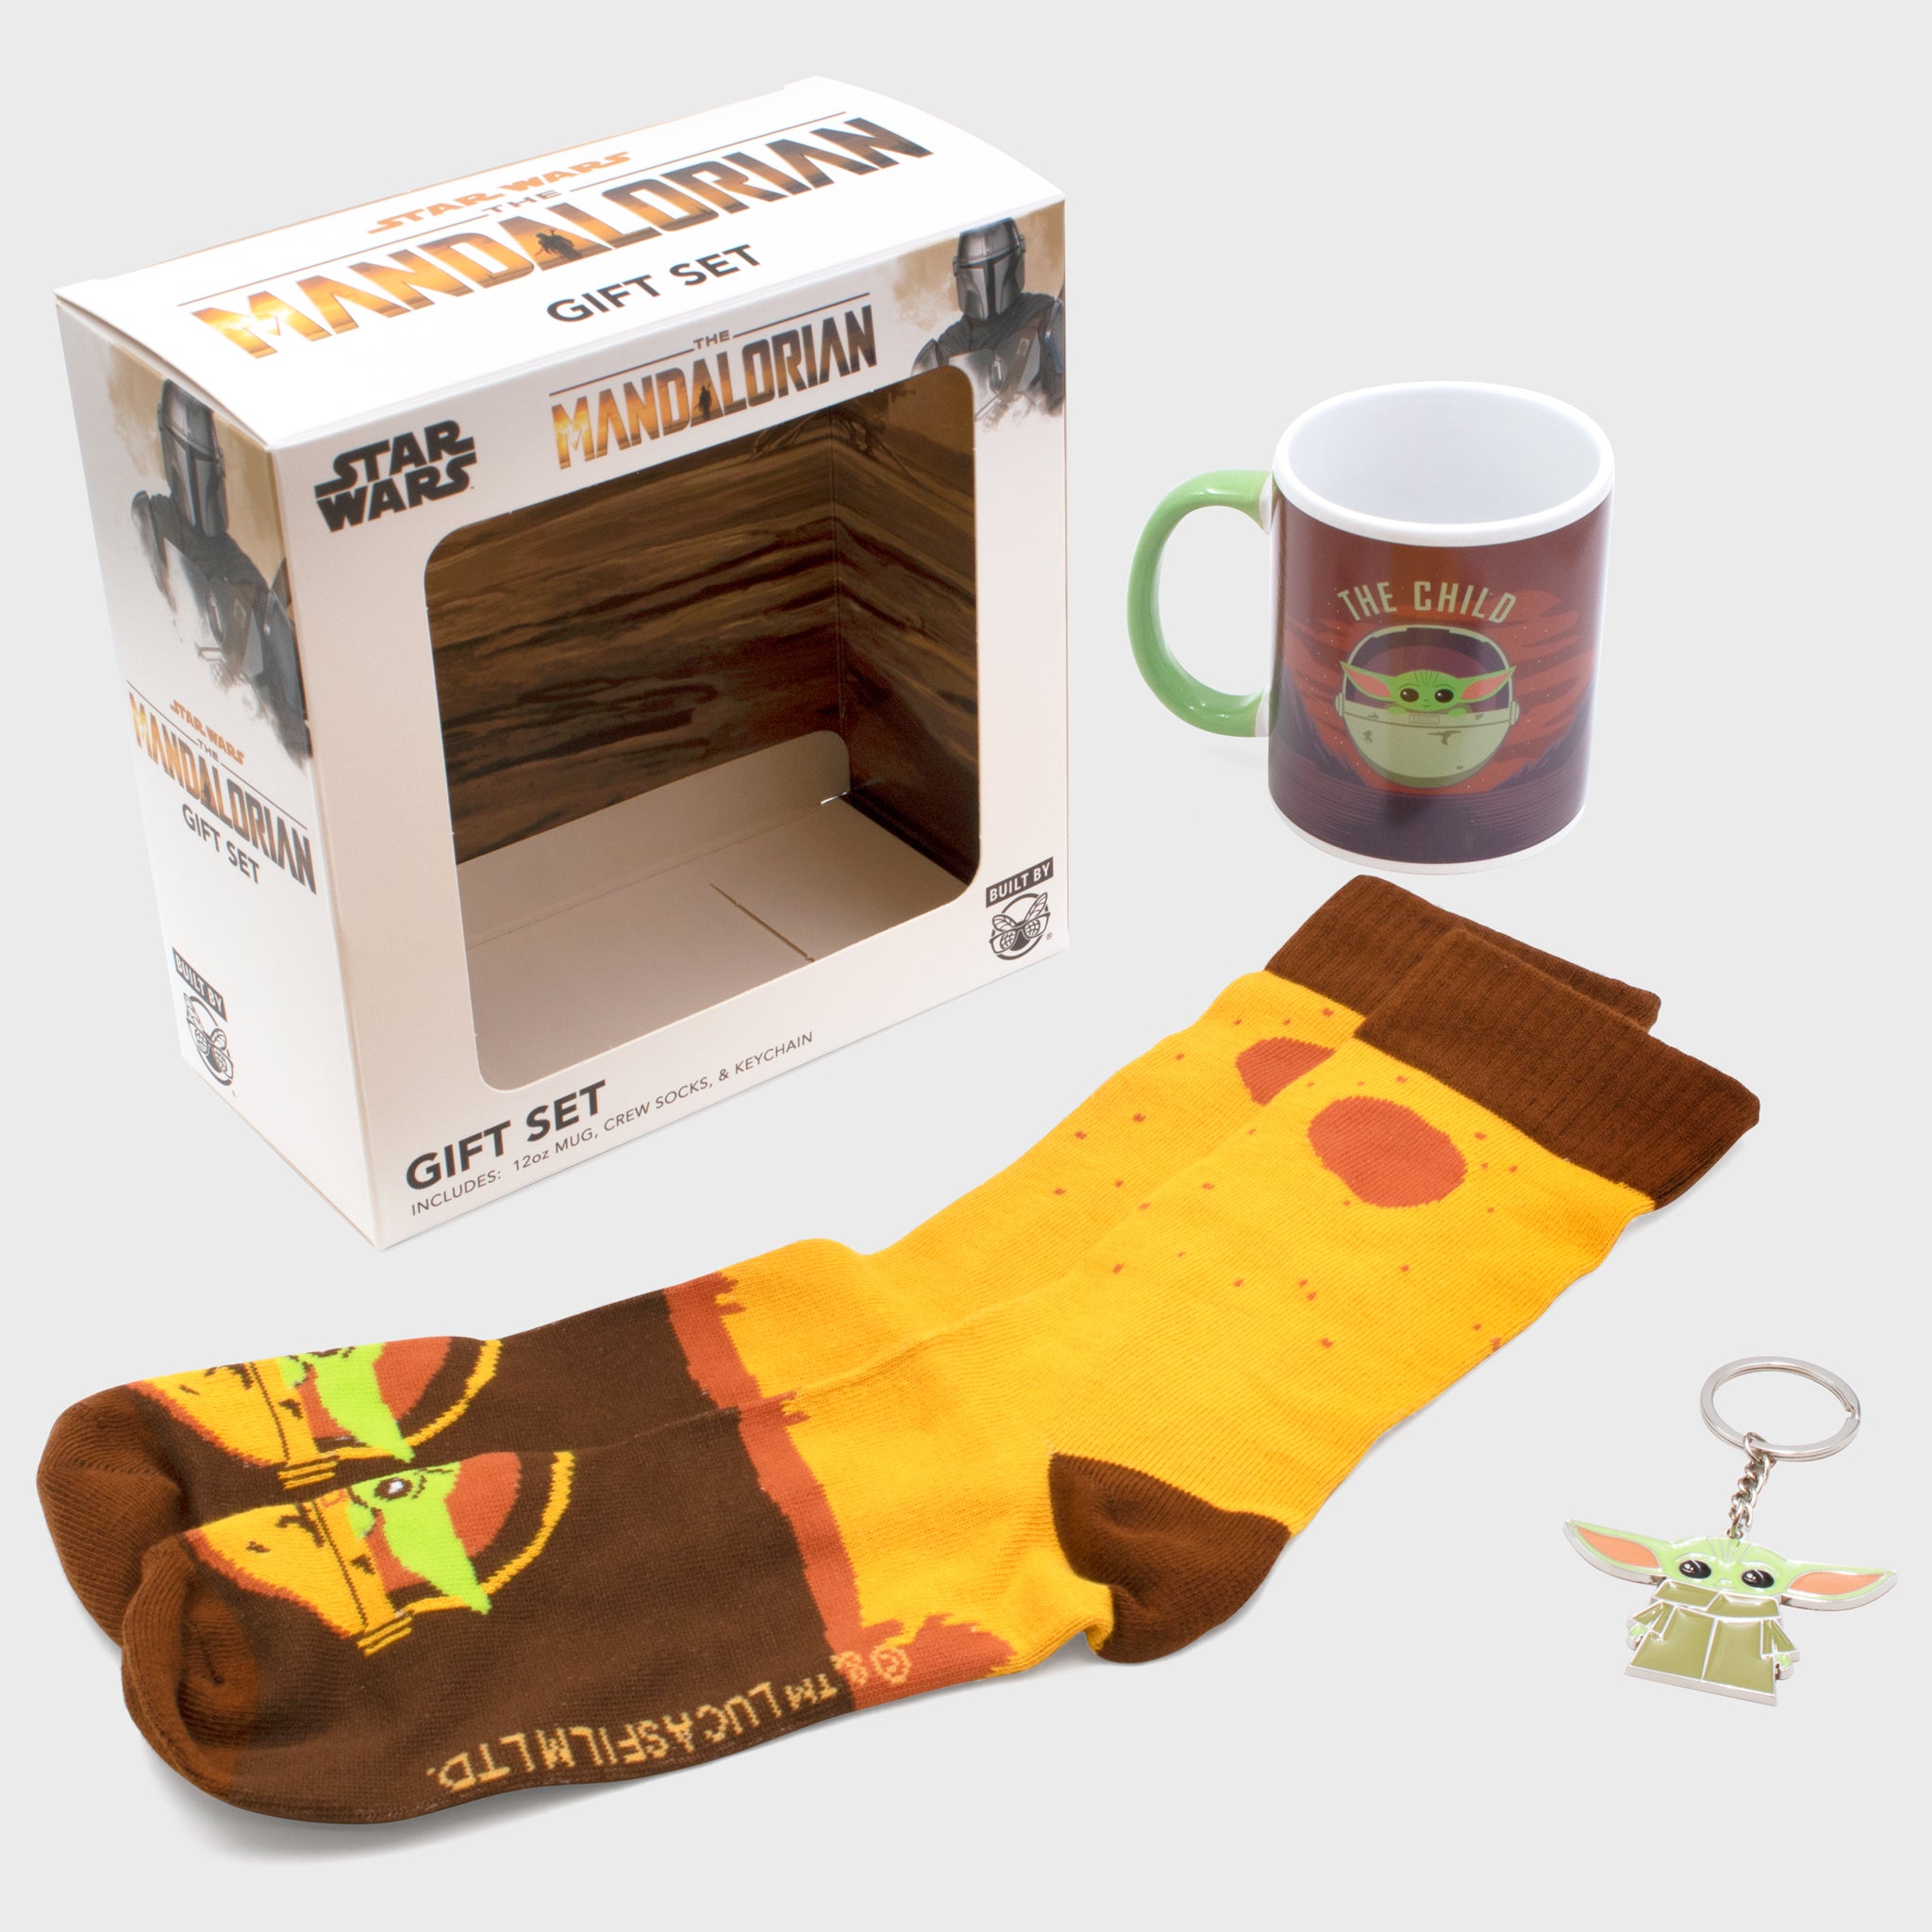 Star Wars - The Mandalorian Grogu Gift Set Bundle by CultureFly